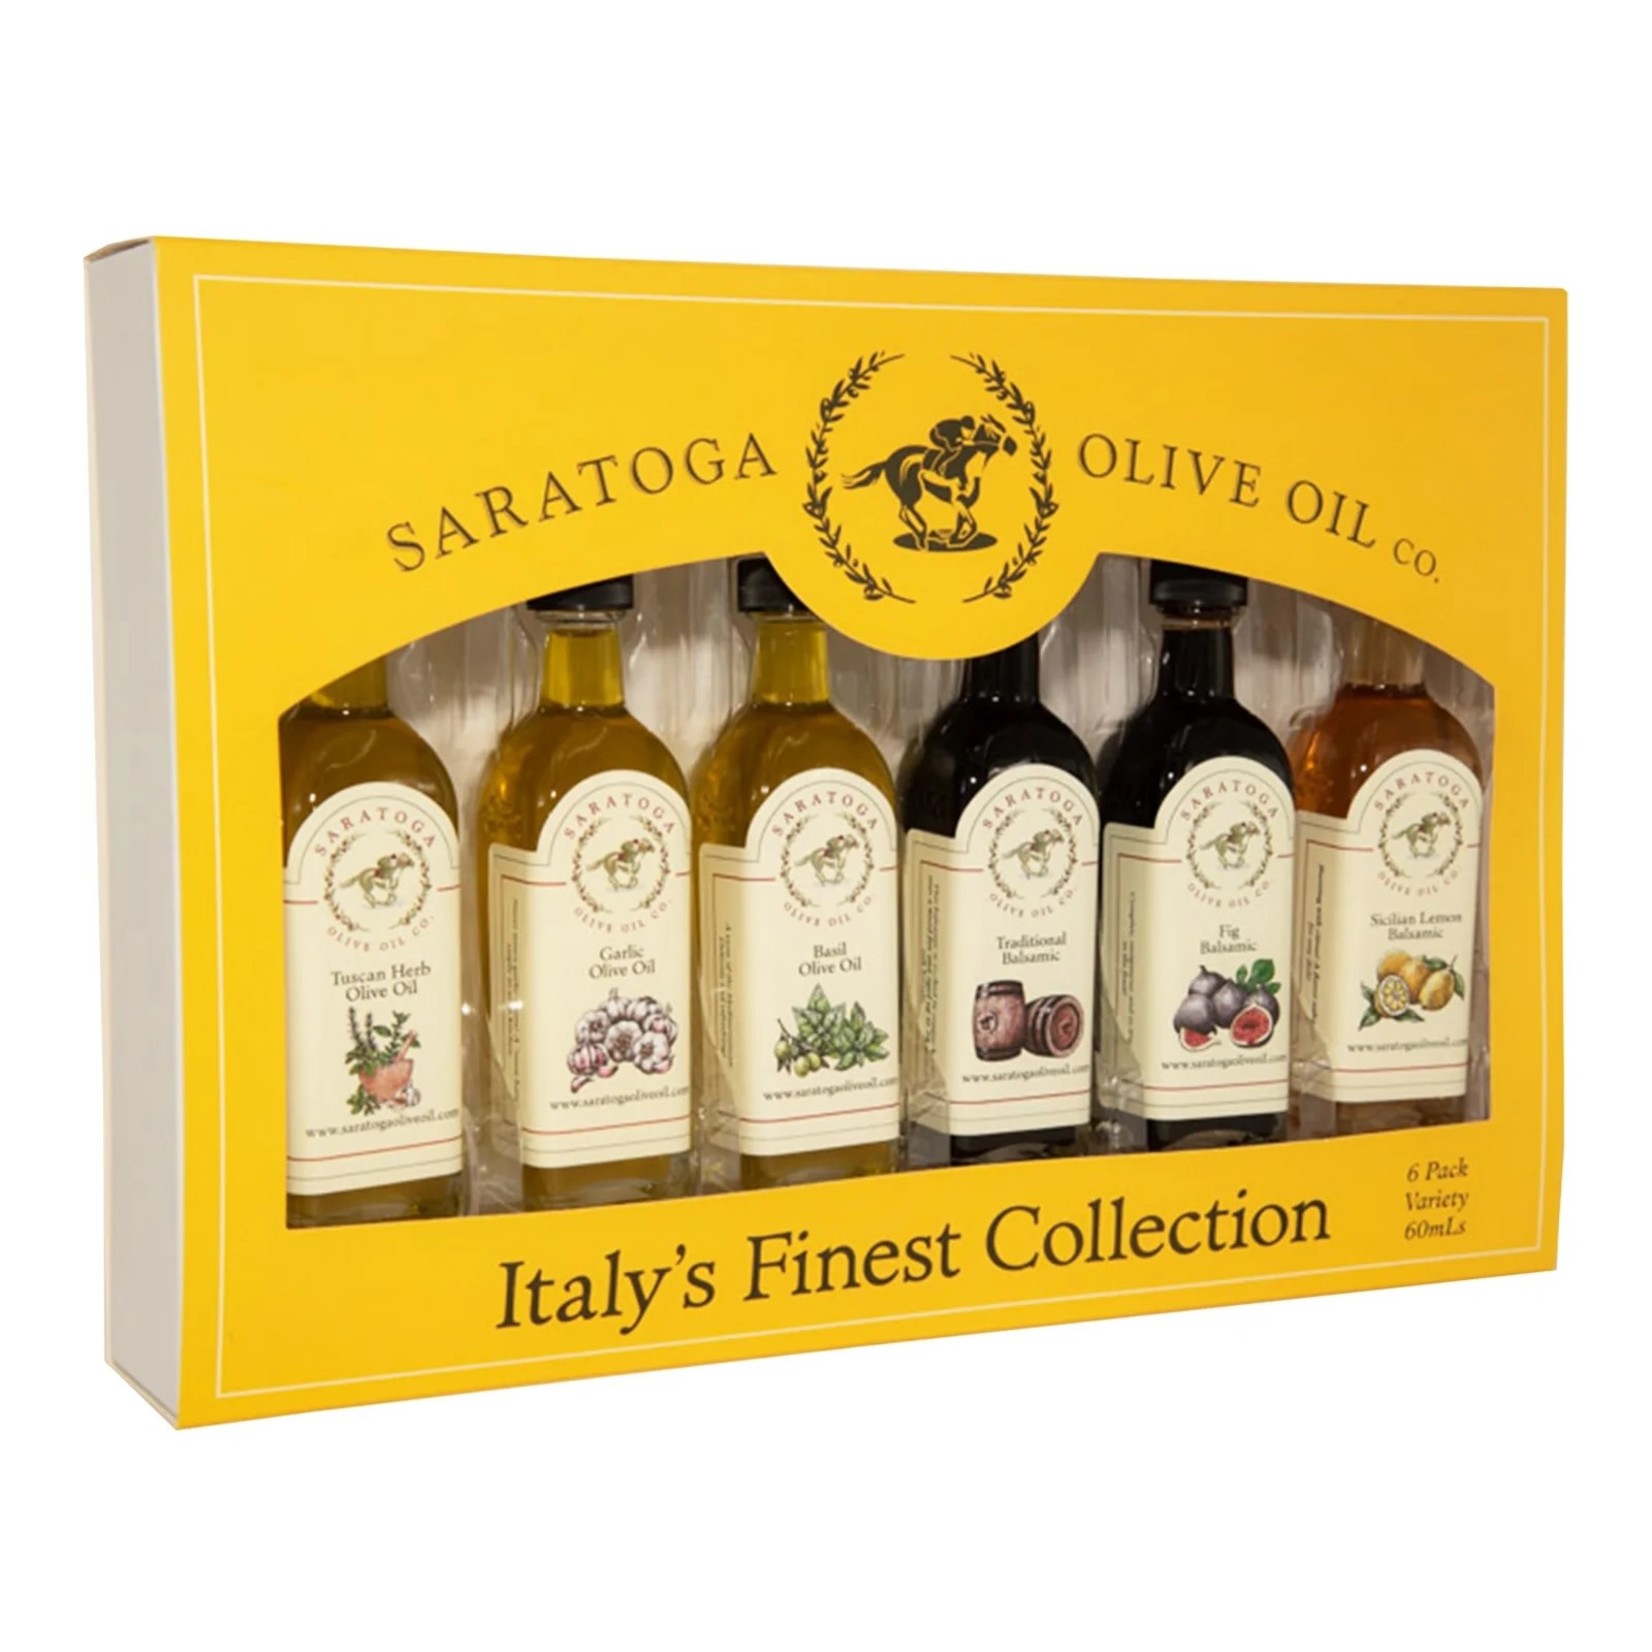 Saratoga Olive Oil Co. Saratoga 60ml Collection - Italy's Finest